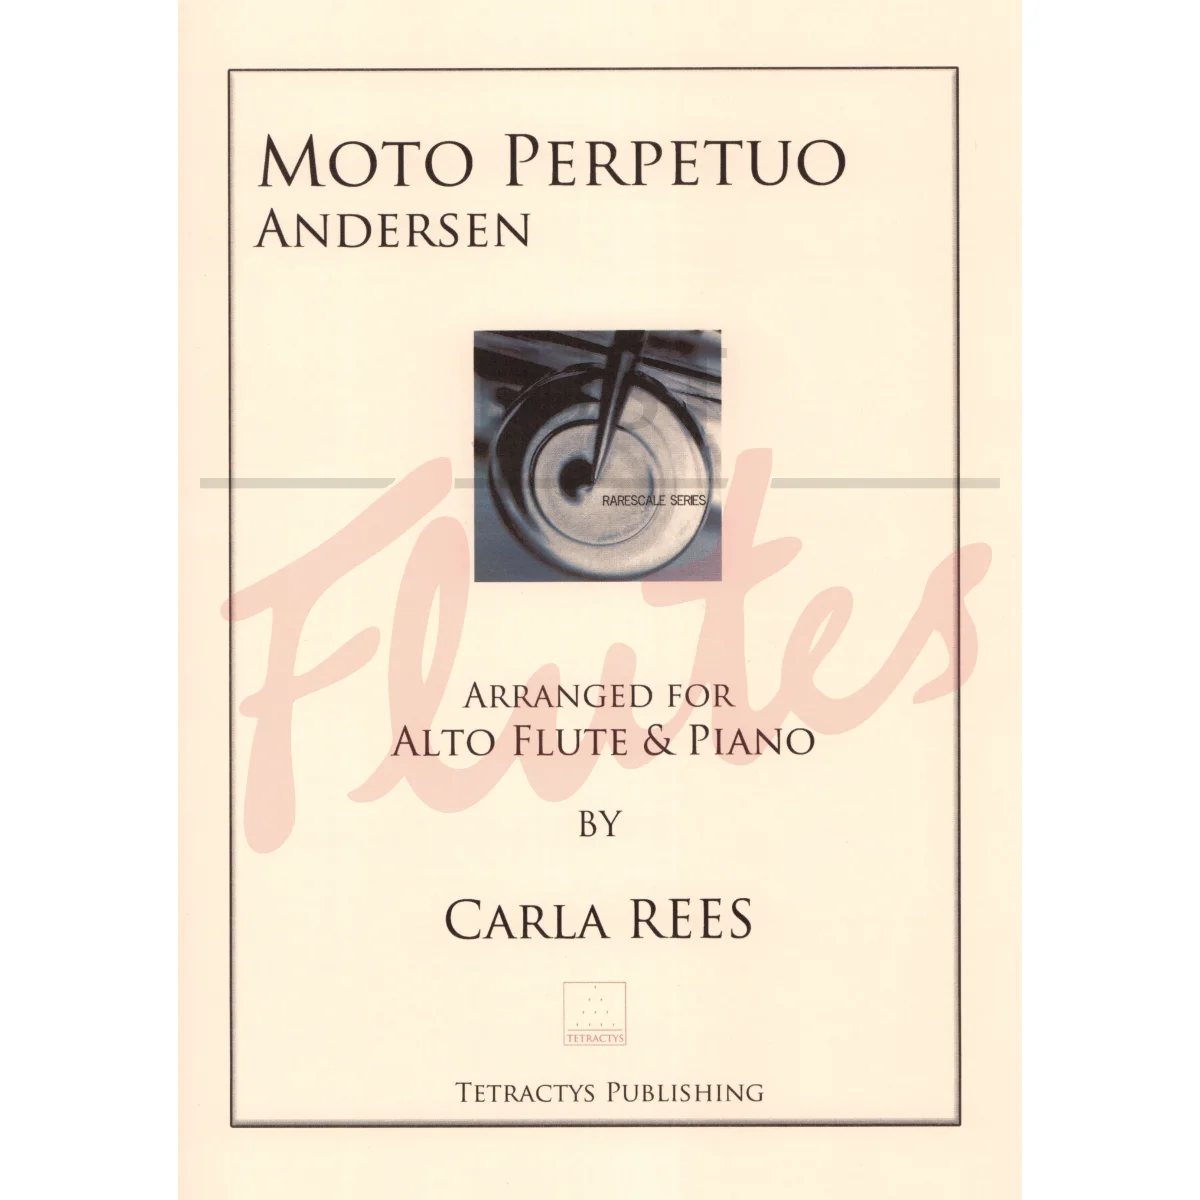 Moto Perpetuo for Alto Flute and Piano